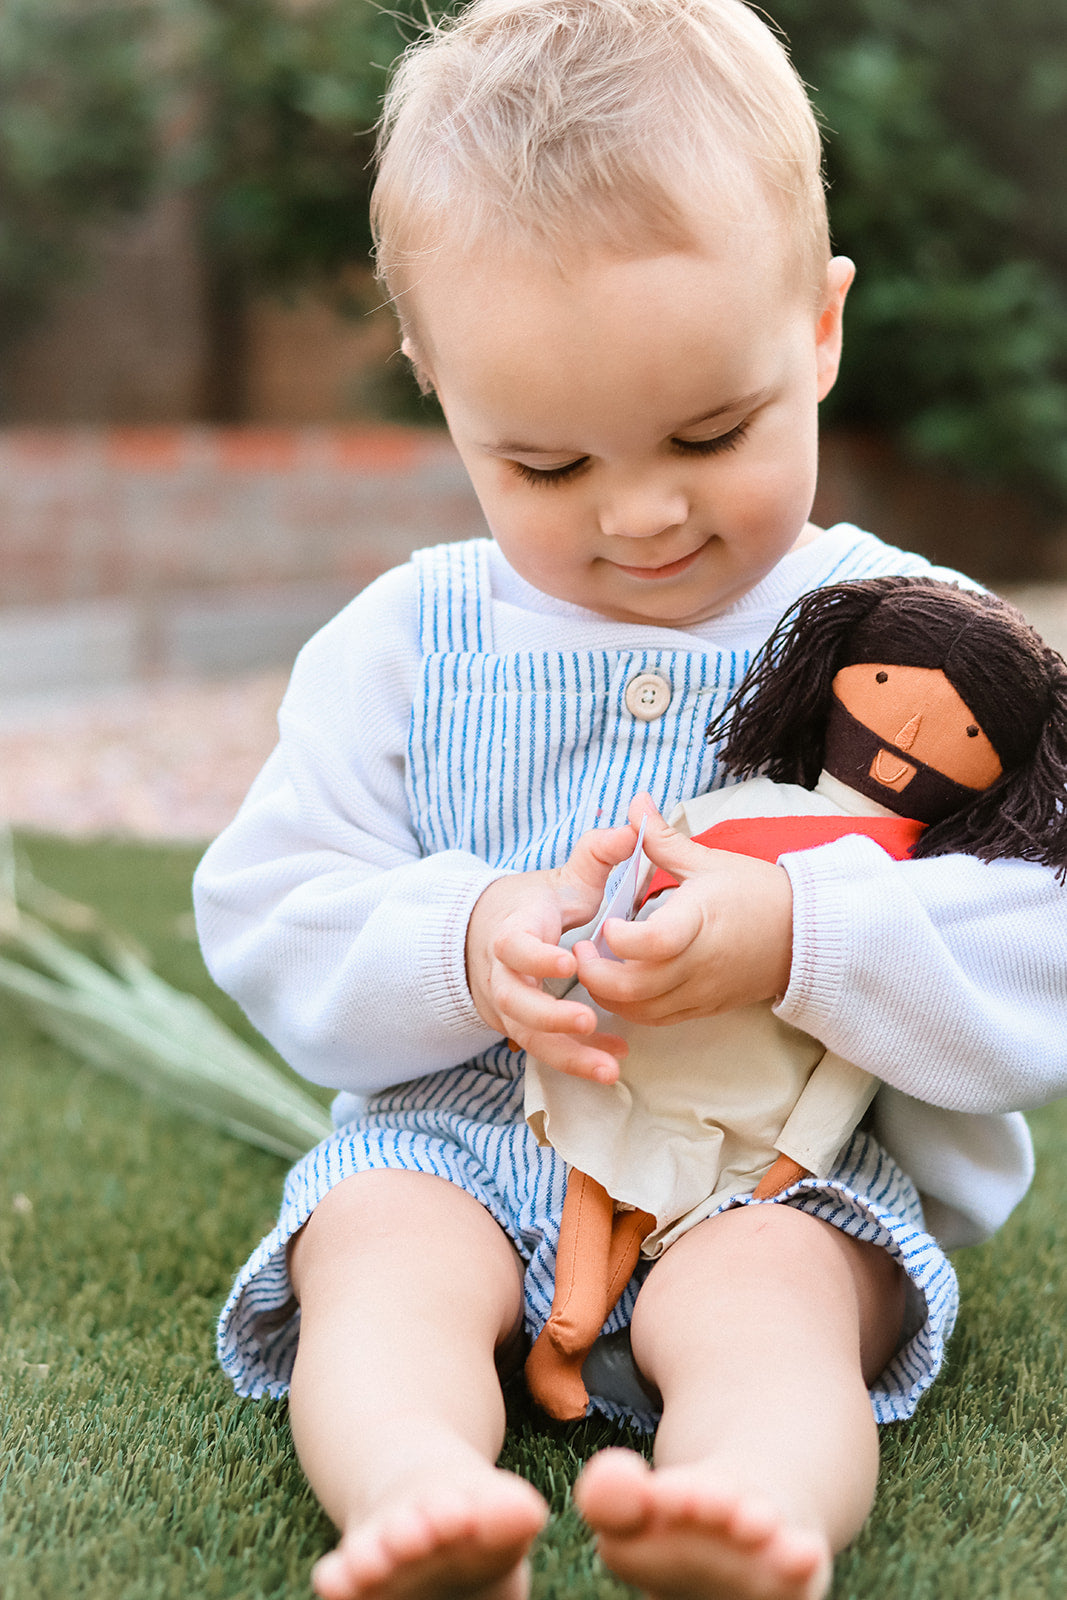 alt="A Toddler holding Jesus of Nazareth Doll"